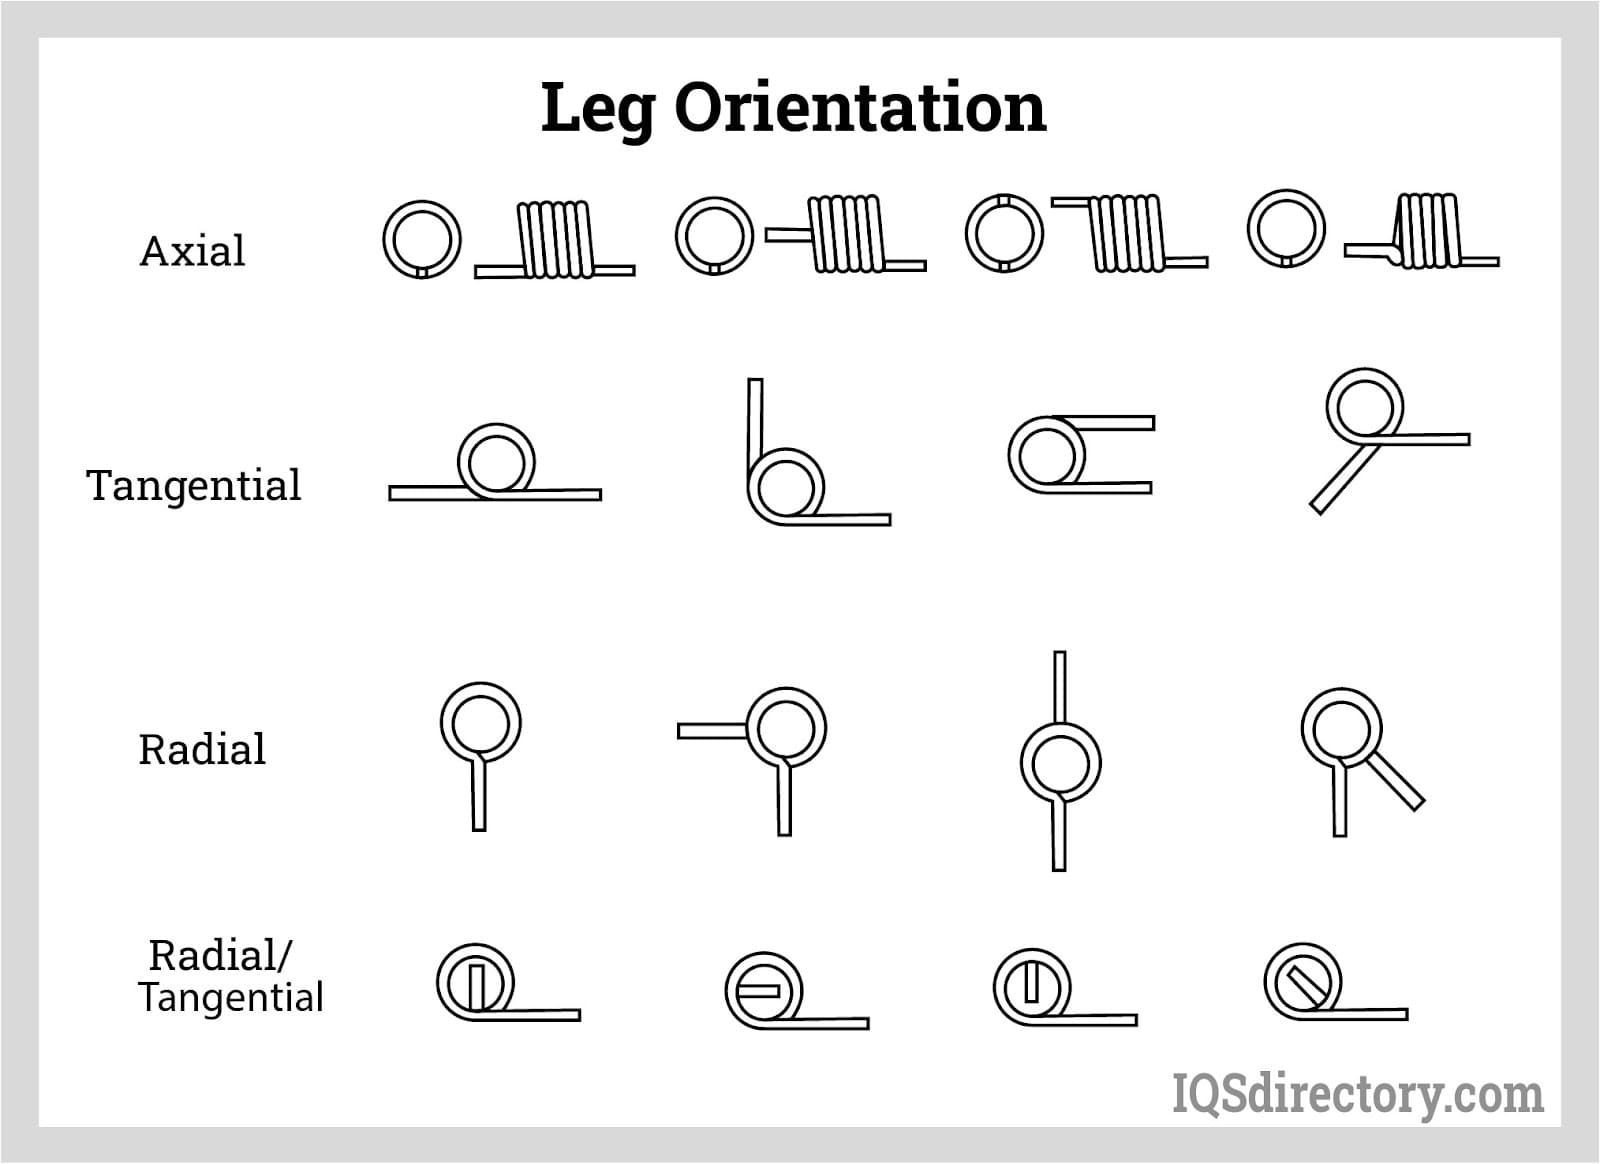 Leg Orientation